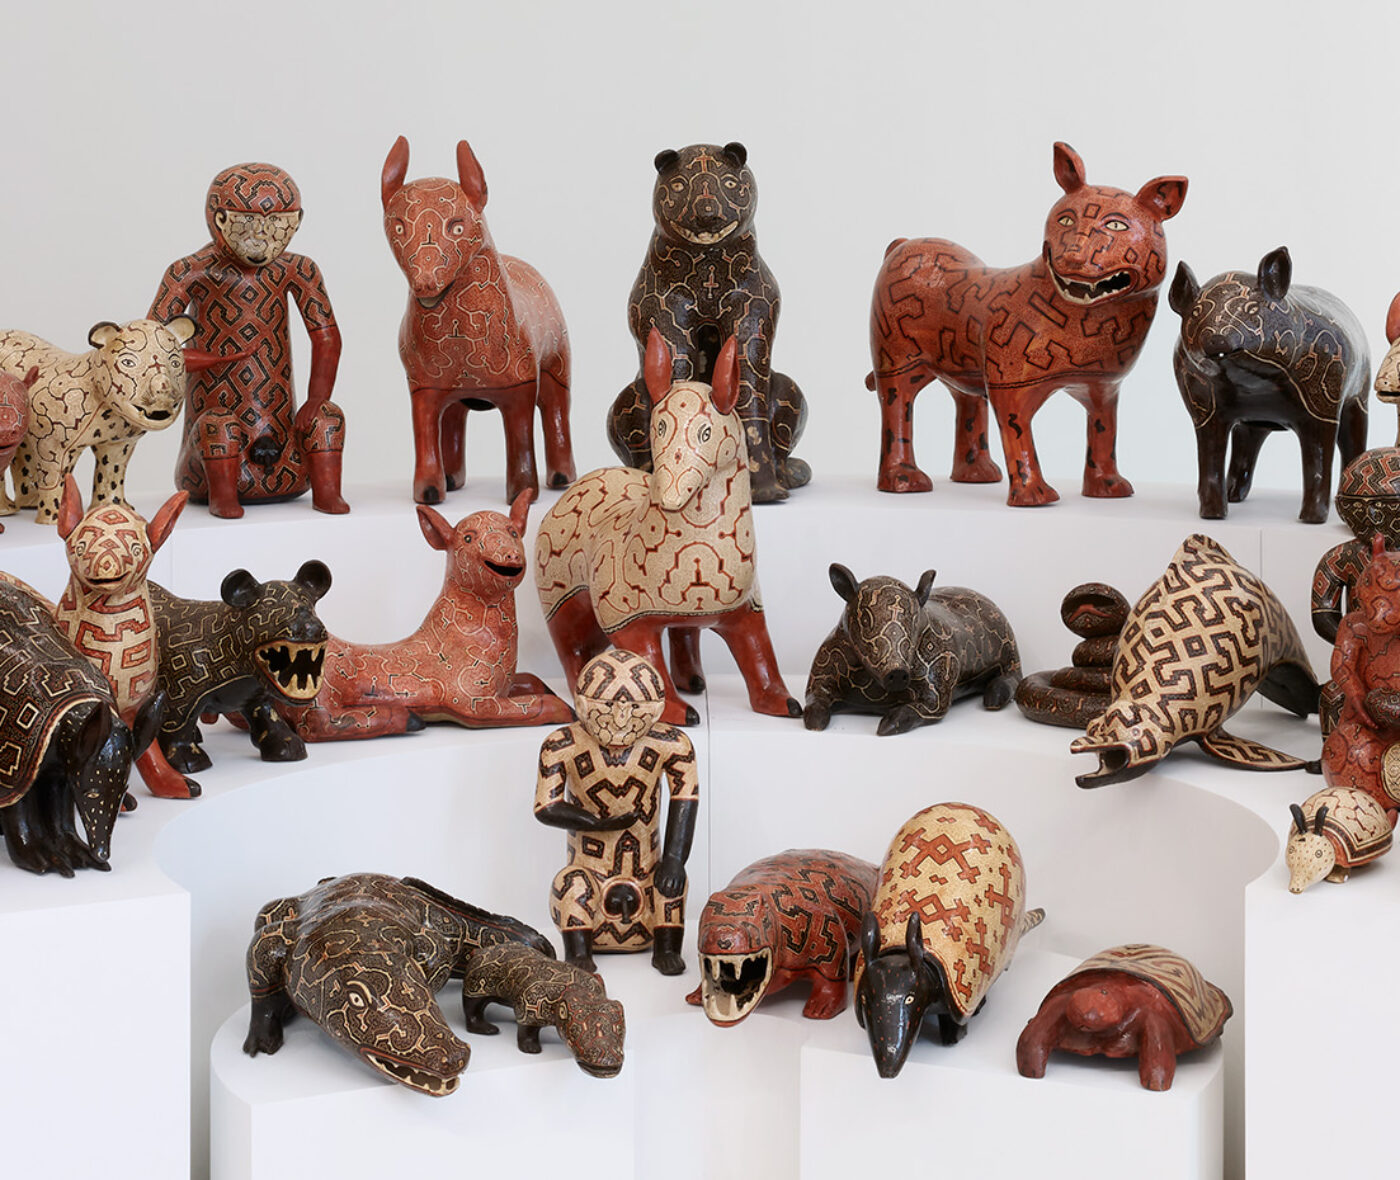 Three rows of different ceramic animal figures